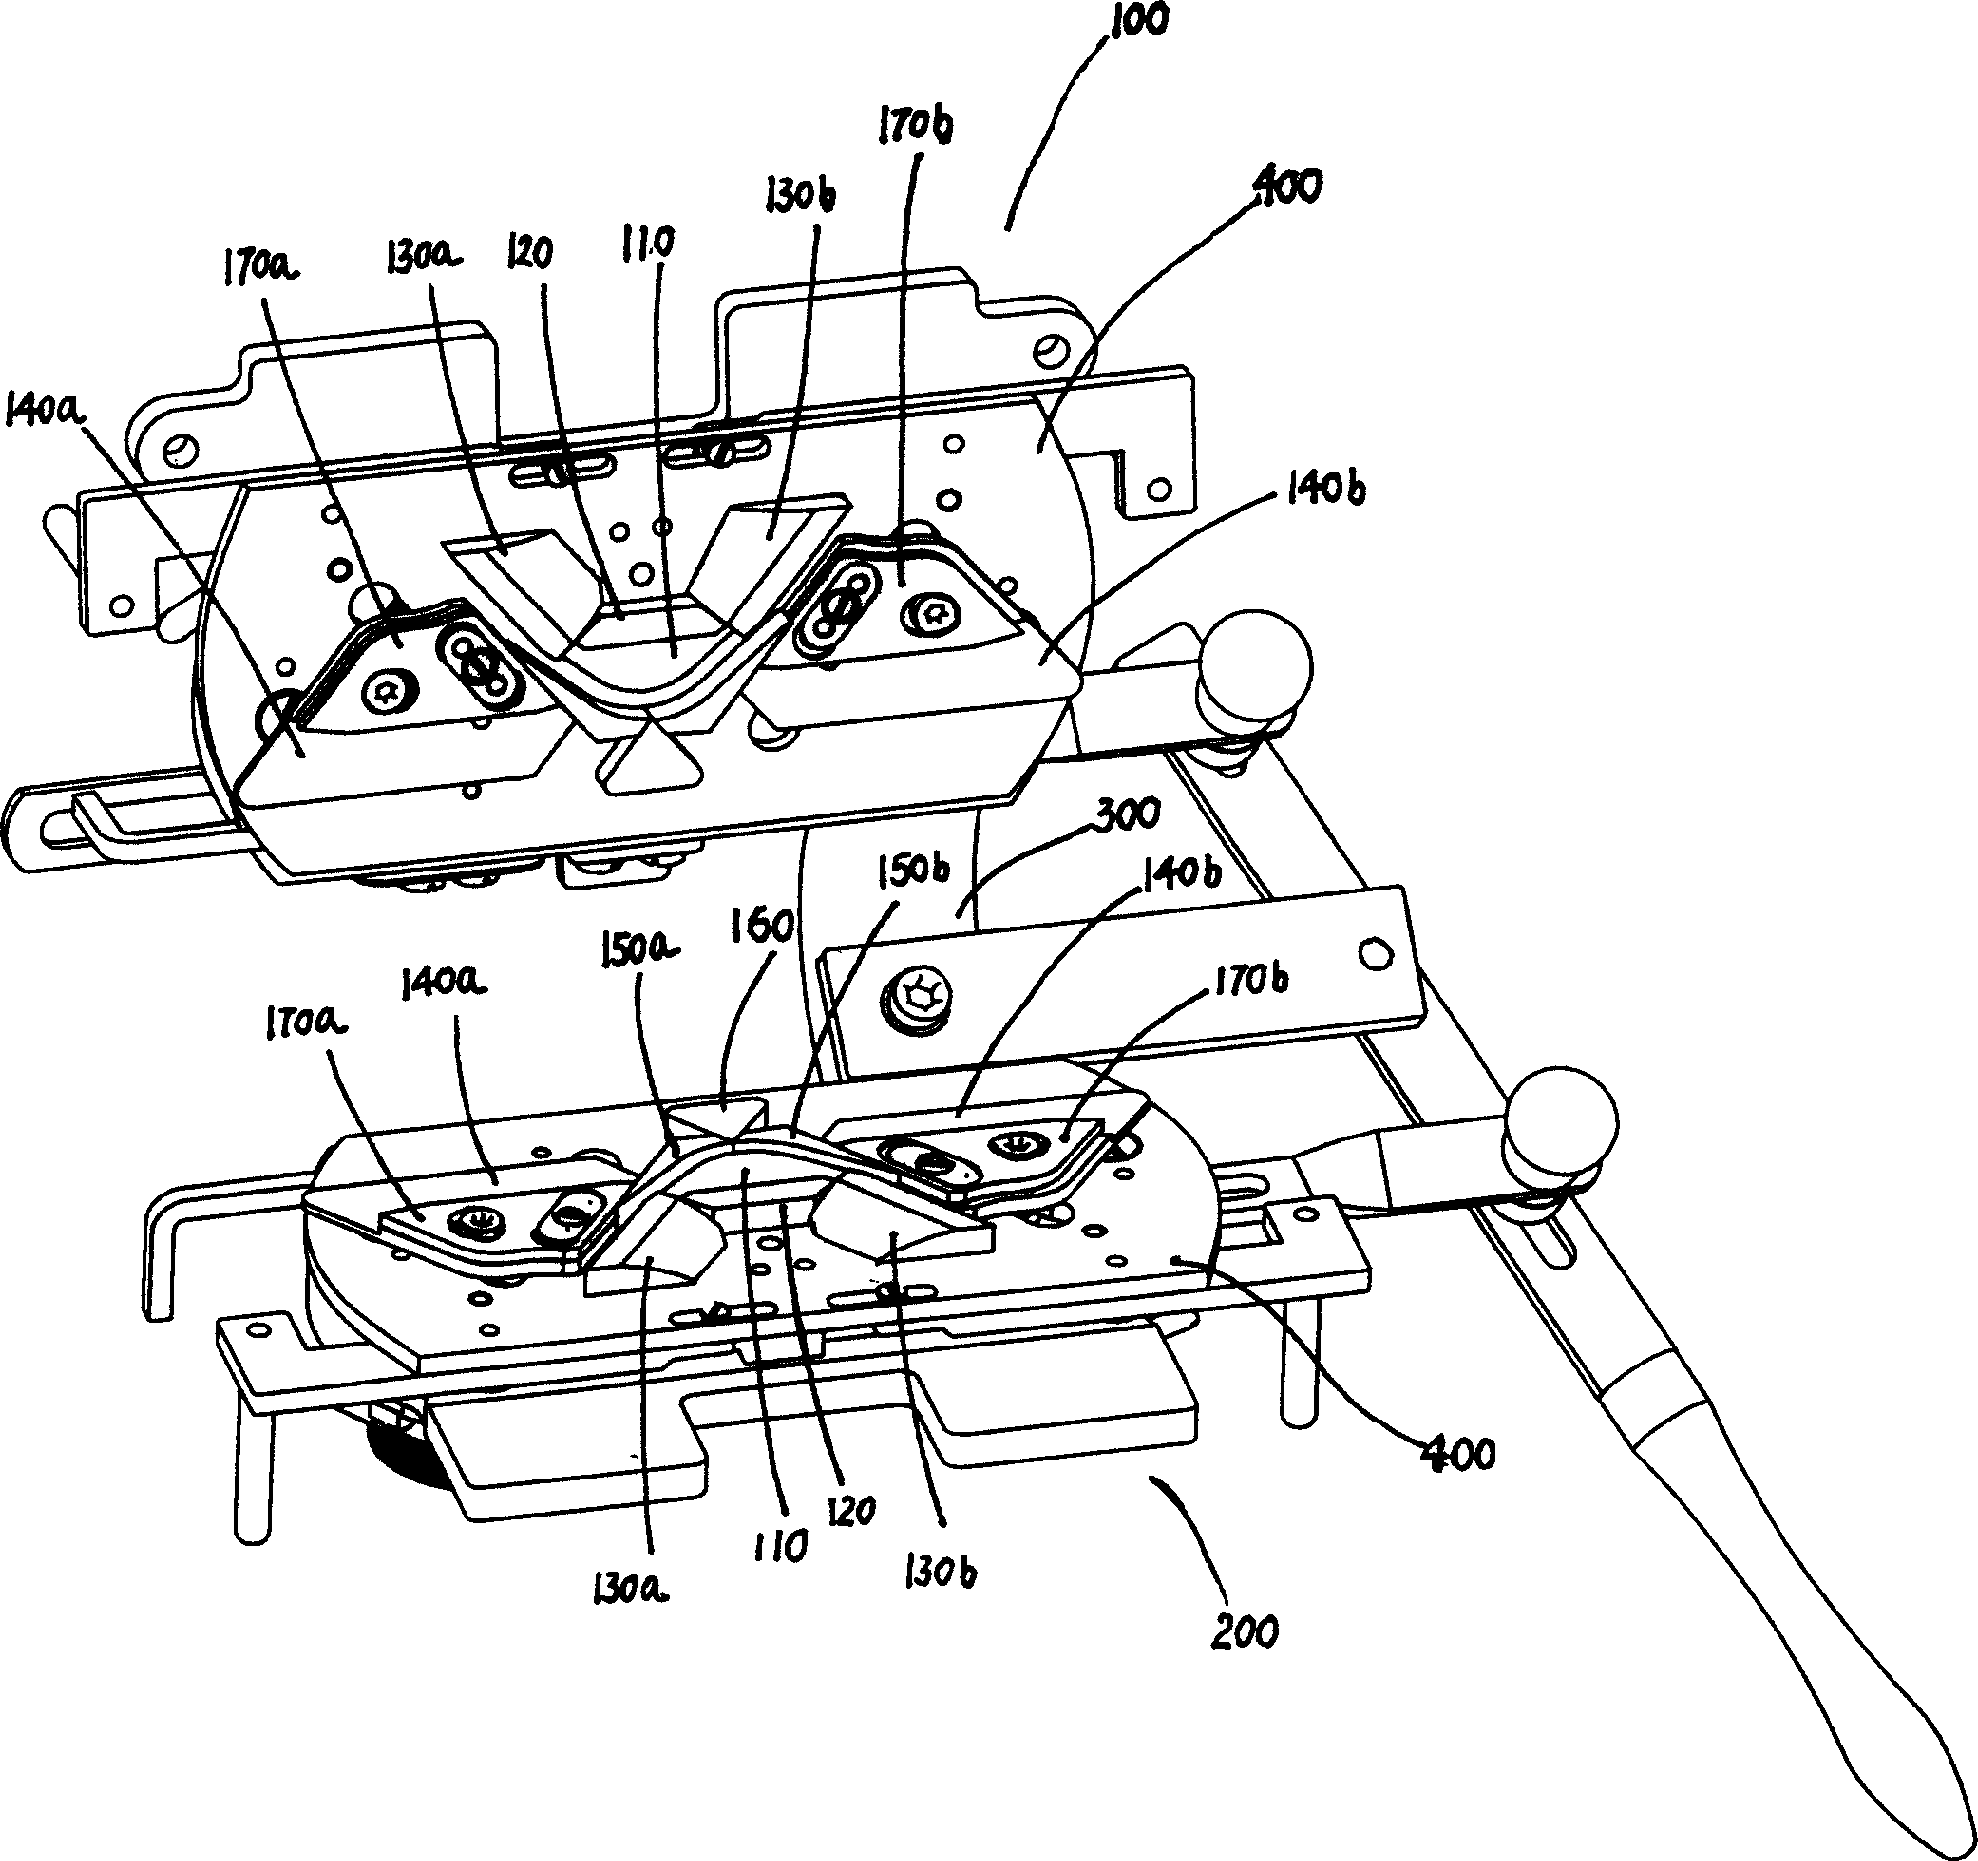 Machine head structure of knitting flat machine